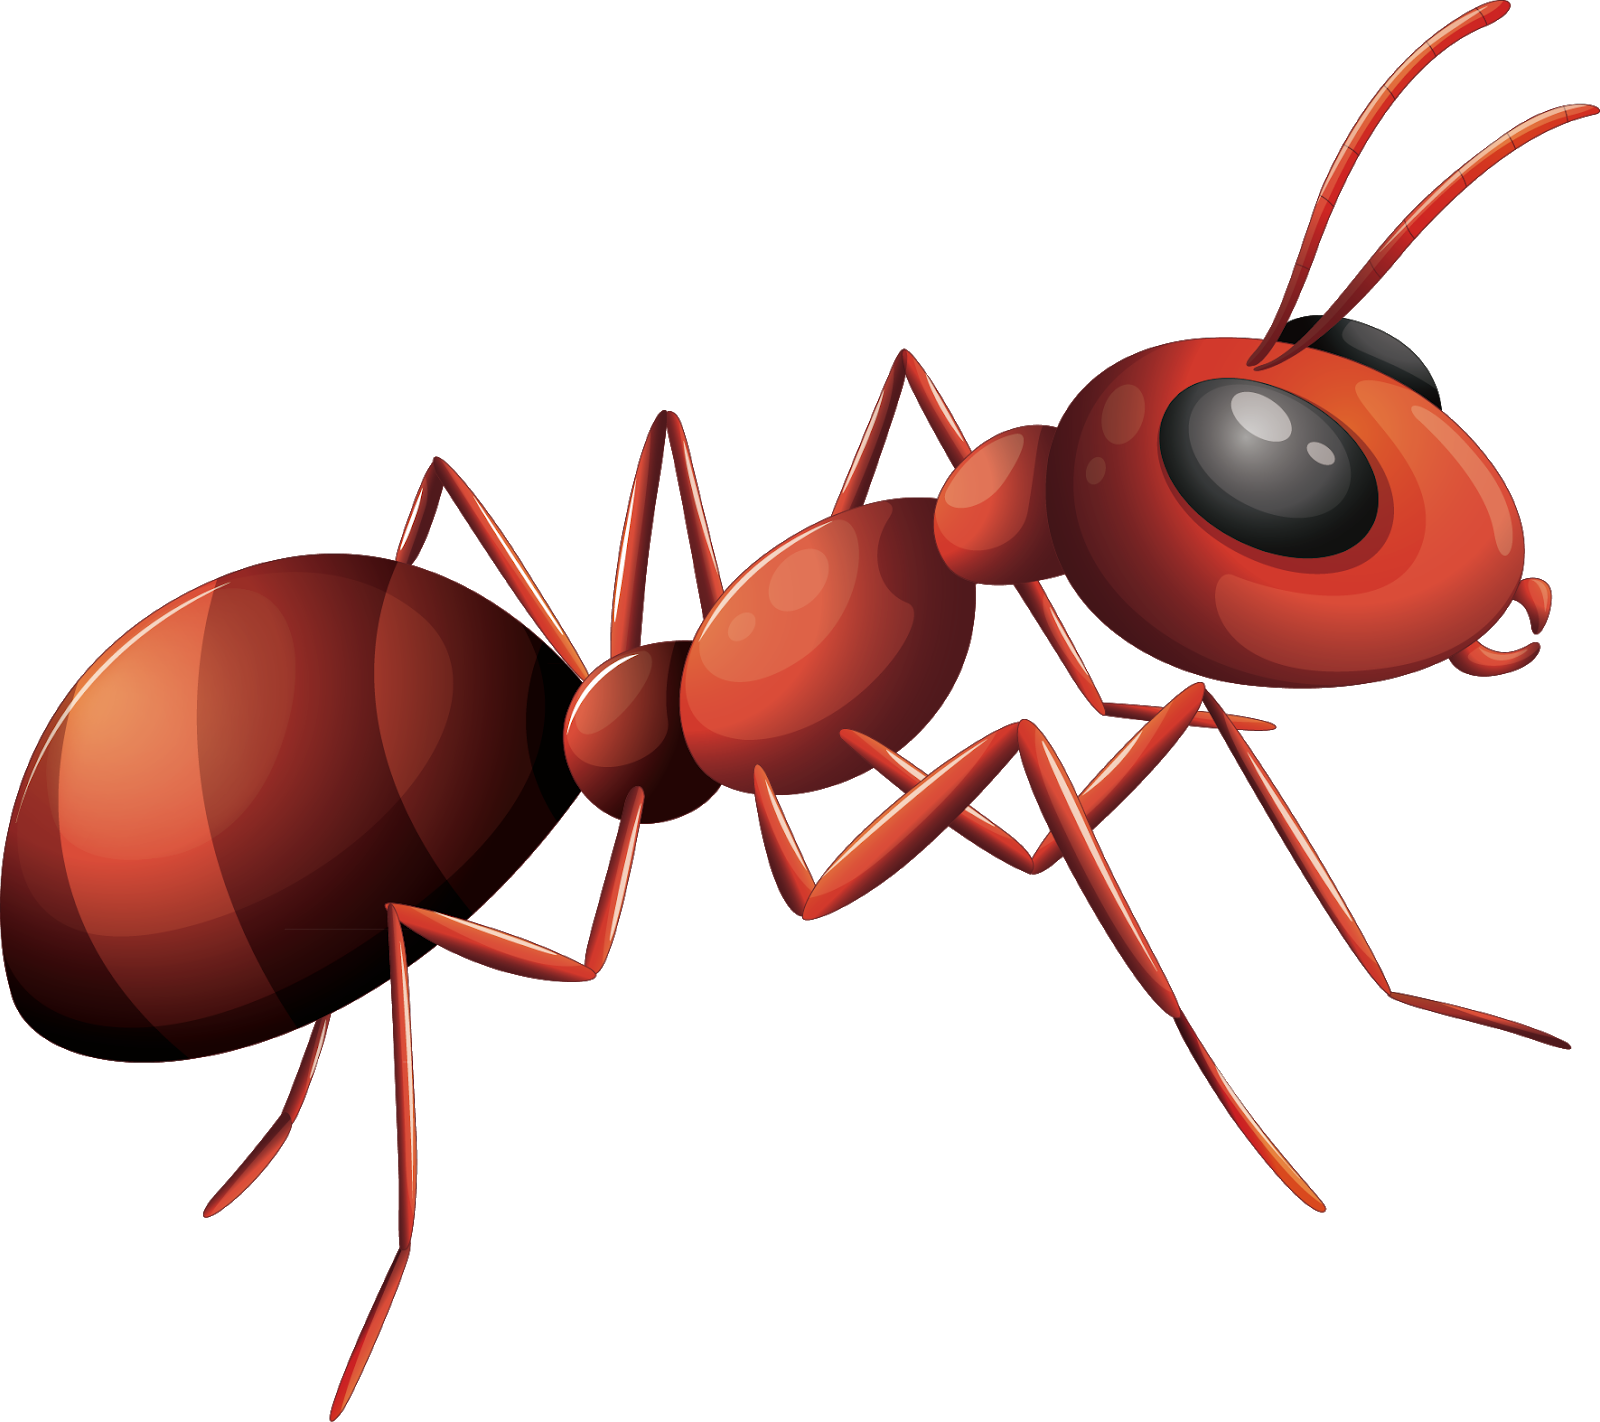 Red Ant Illustration PNG image